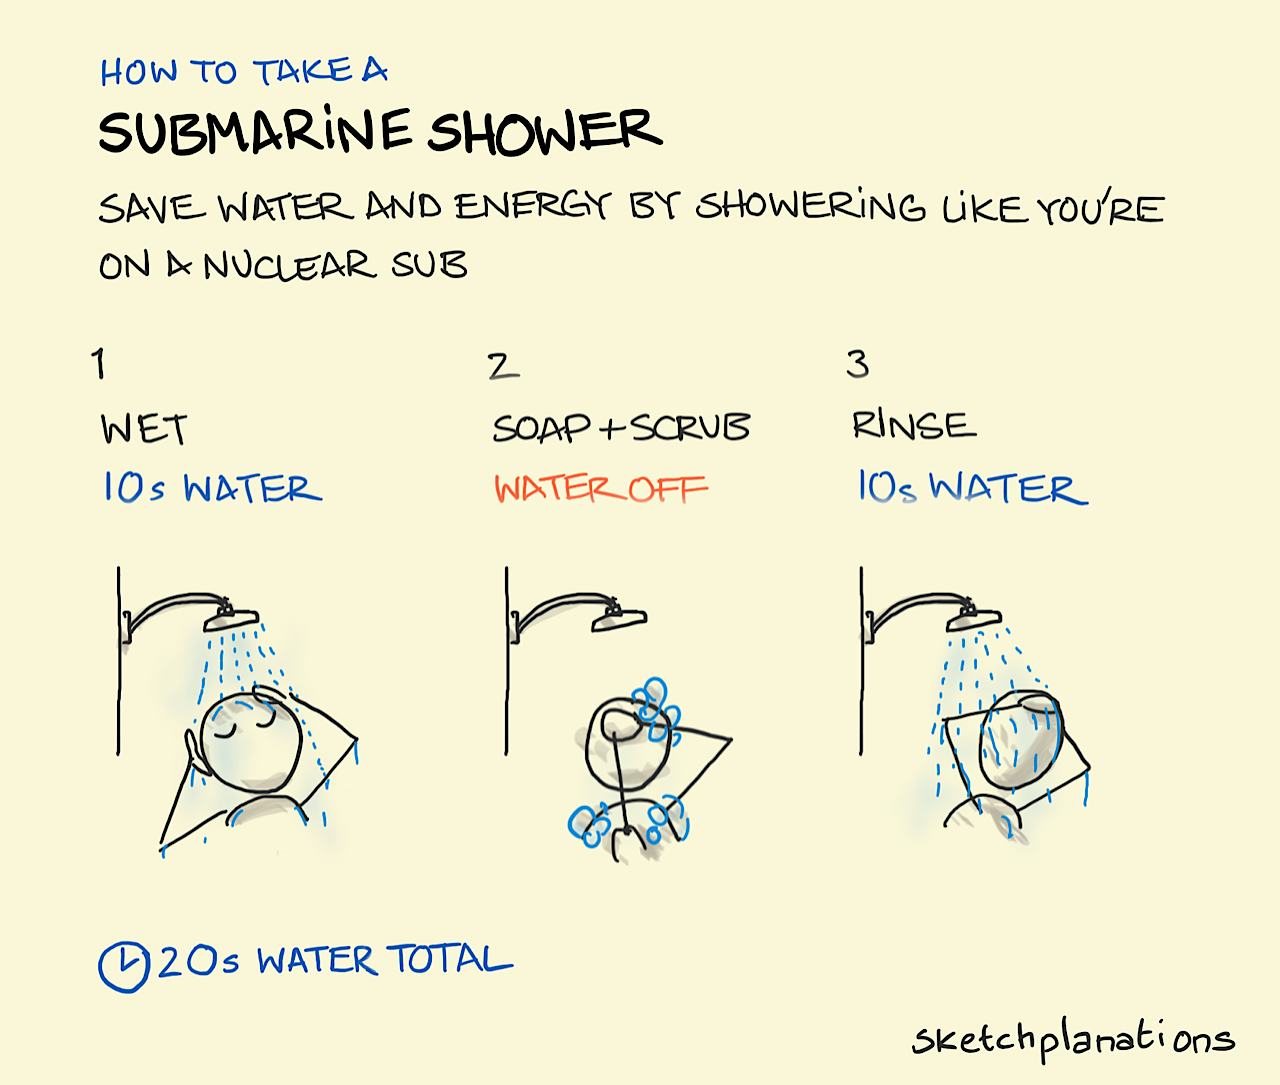 Submarine shower - Sketchplanations